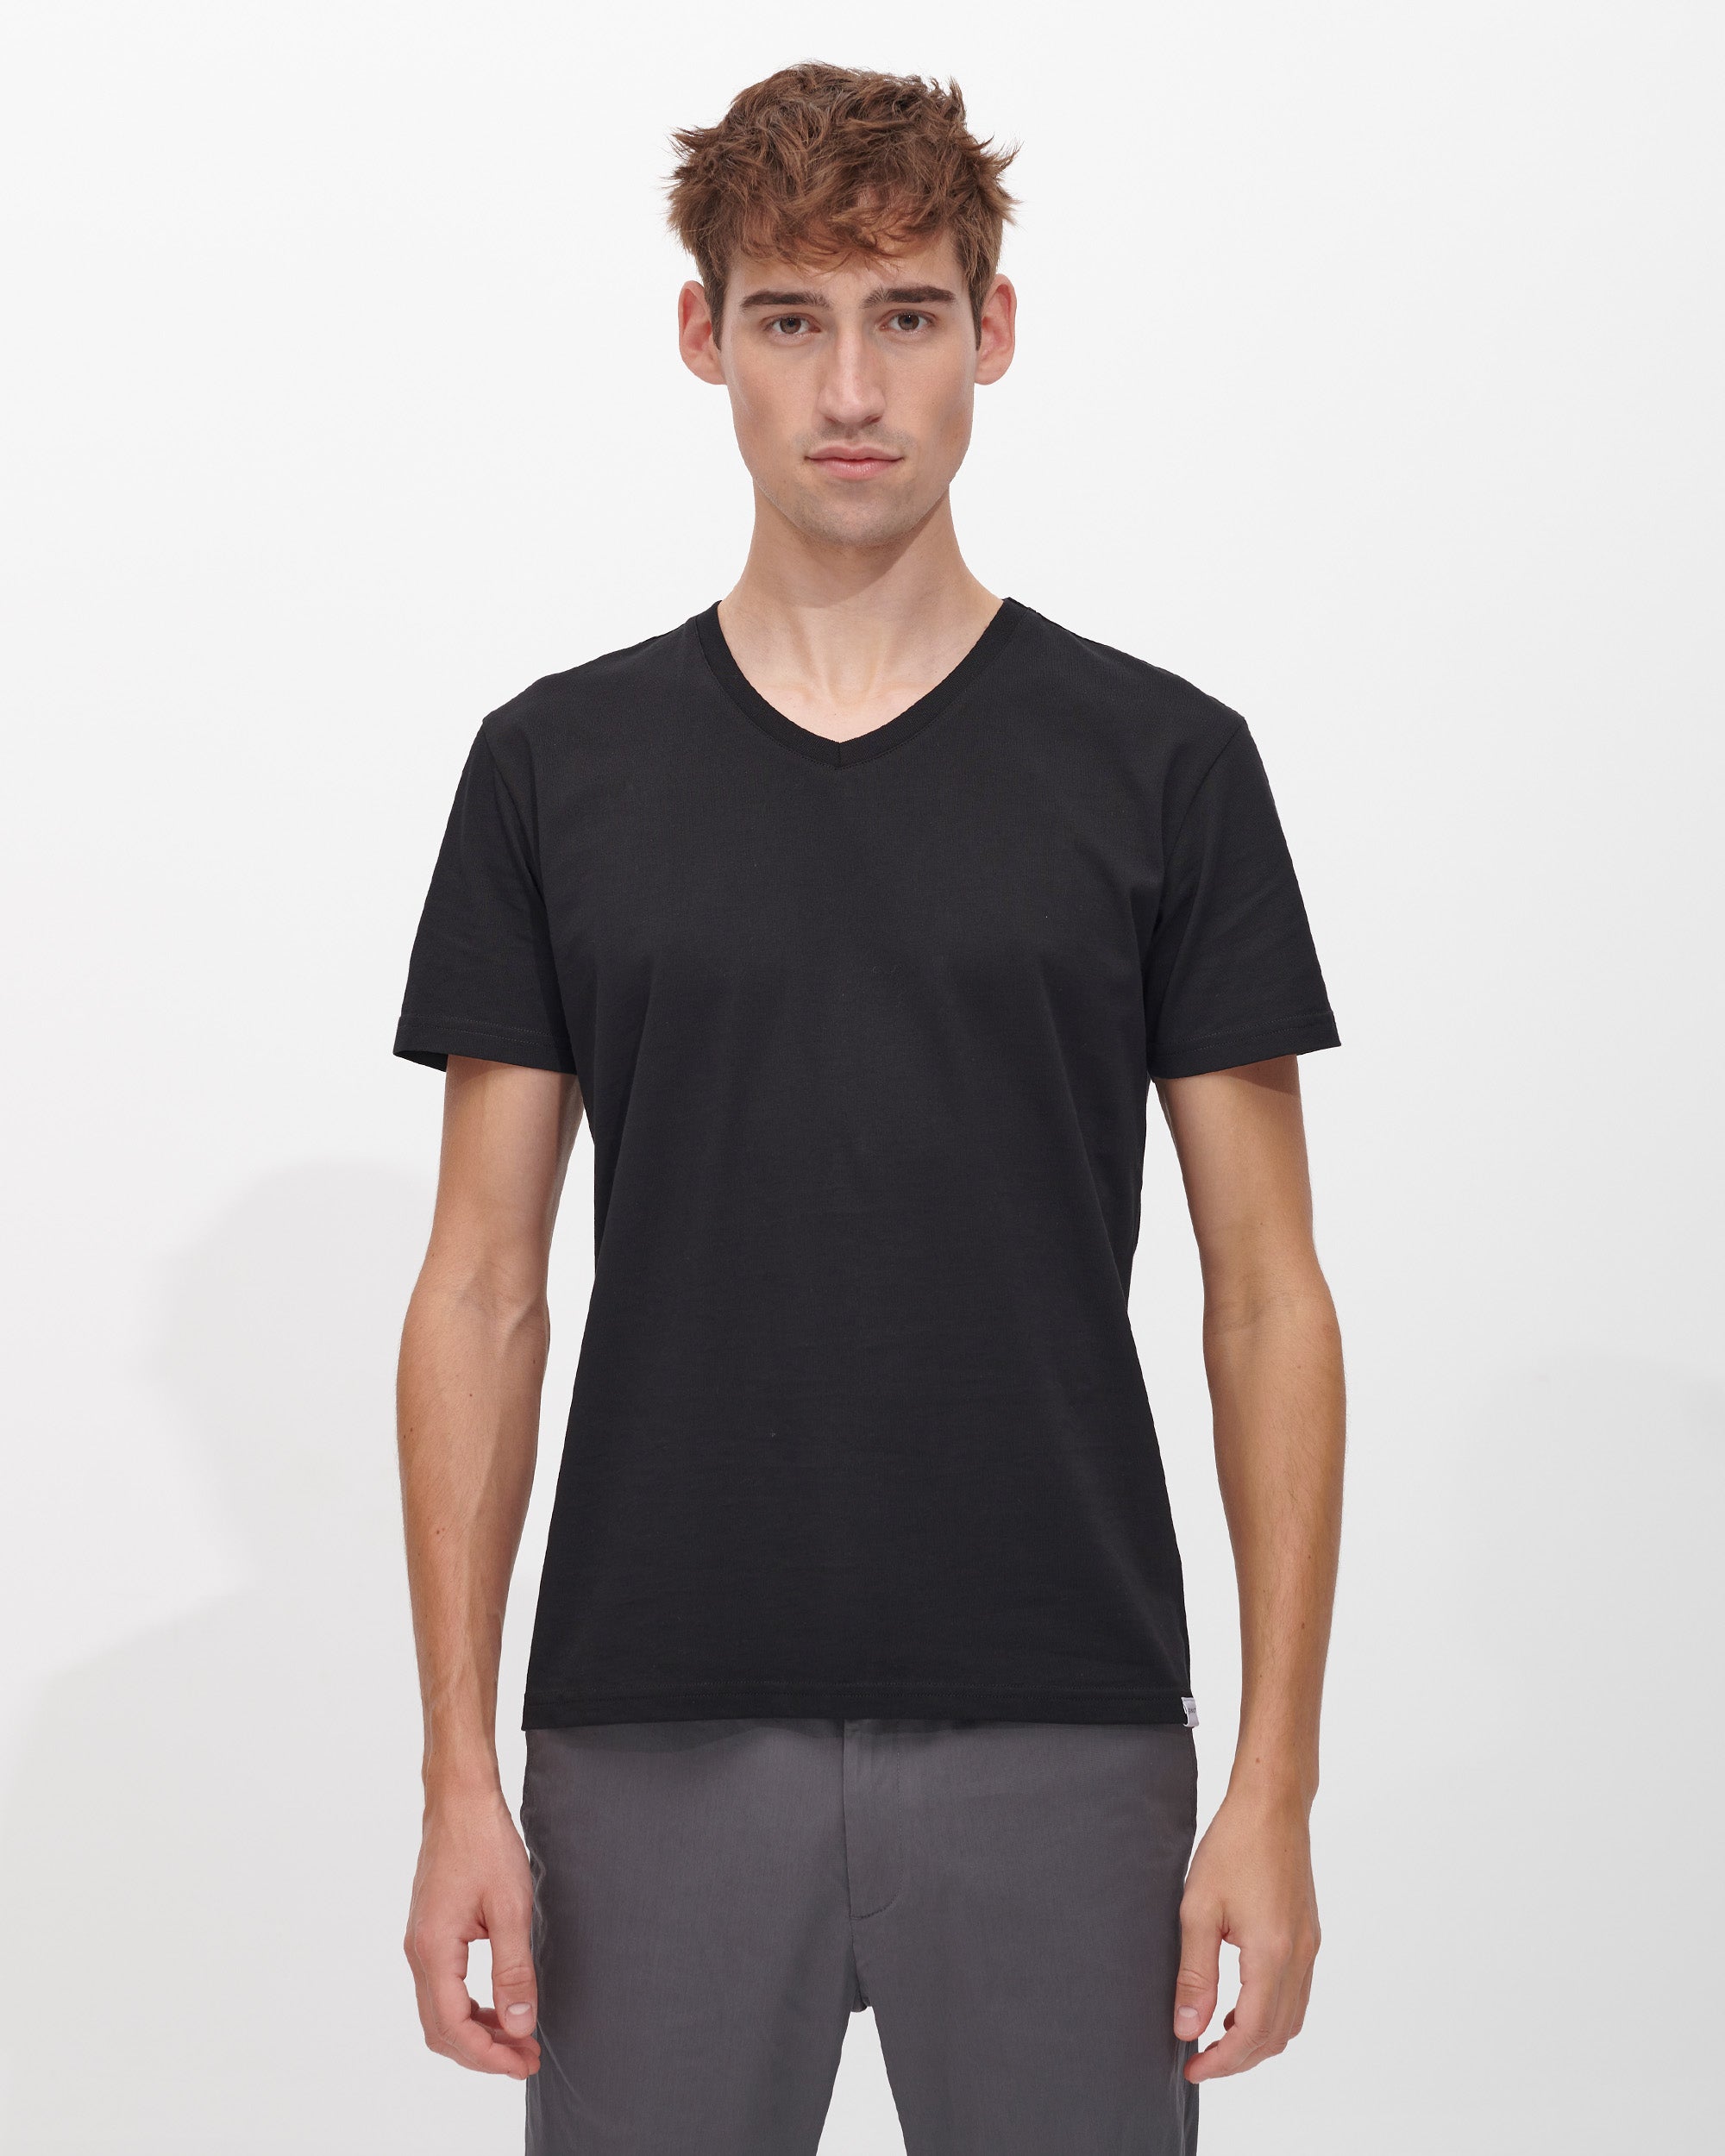 Black V Neck T Shirt for Men | Premium 185GSM Cotton